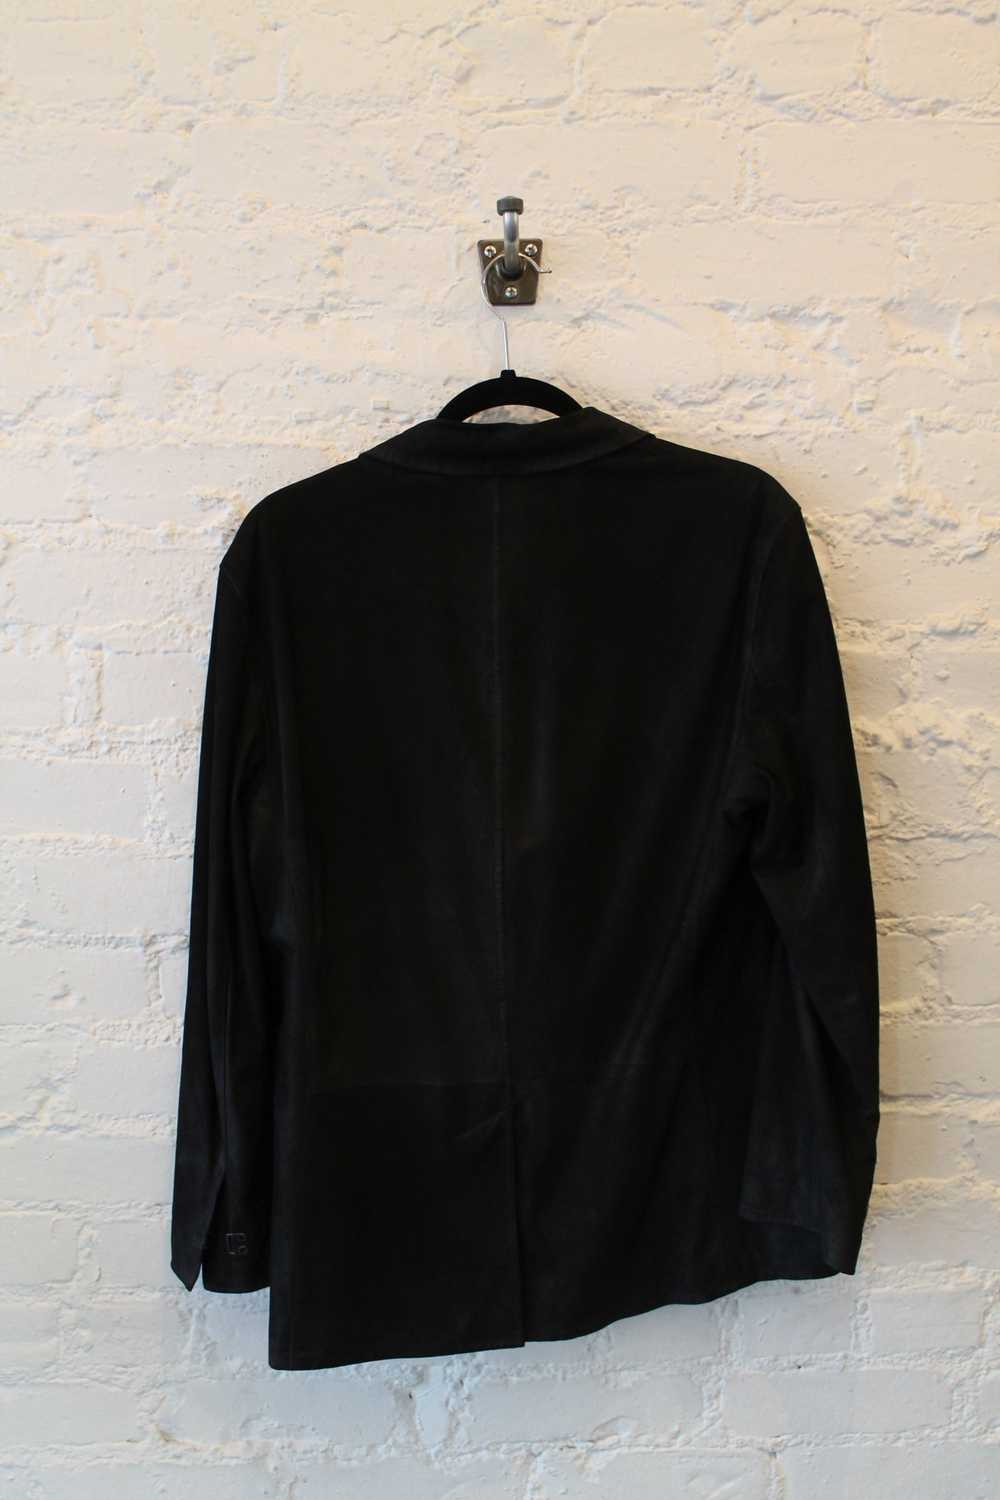 John Varvatos Black Suede Blazer Jacket - image 2